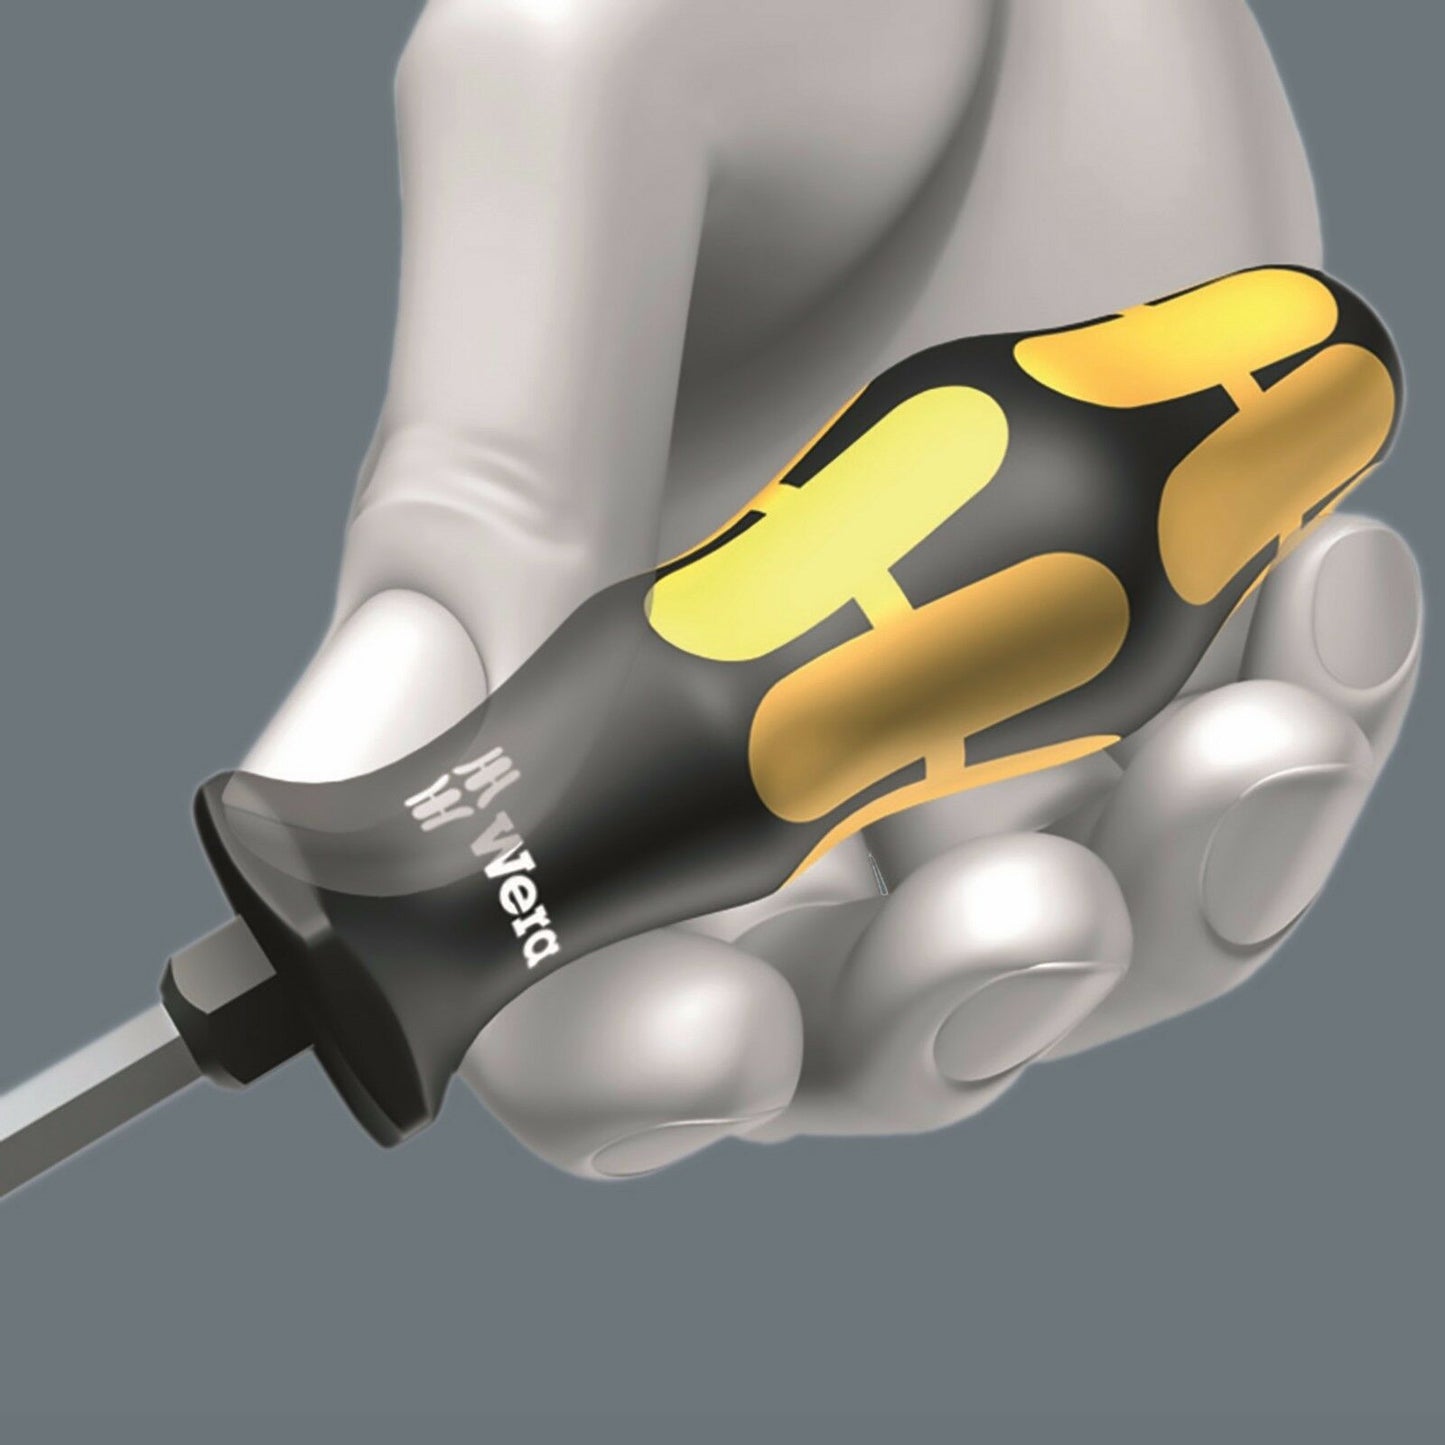 wera 932/6 kraftform chiseldriver screwdriver set with rack 05018282001